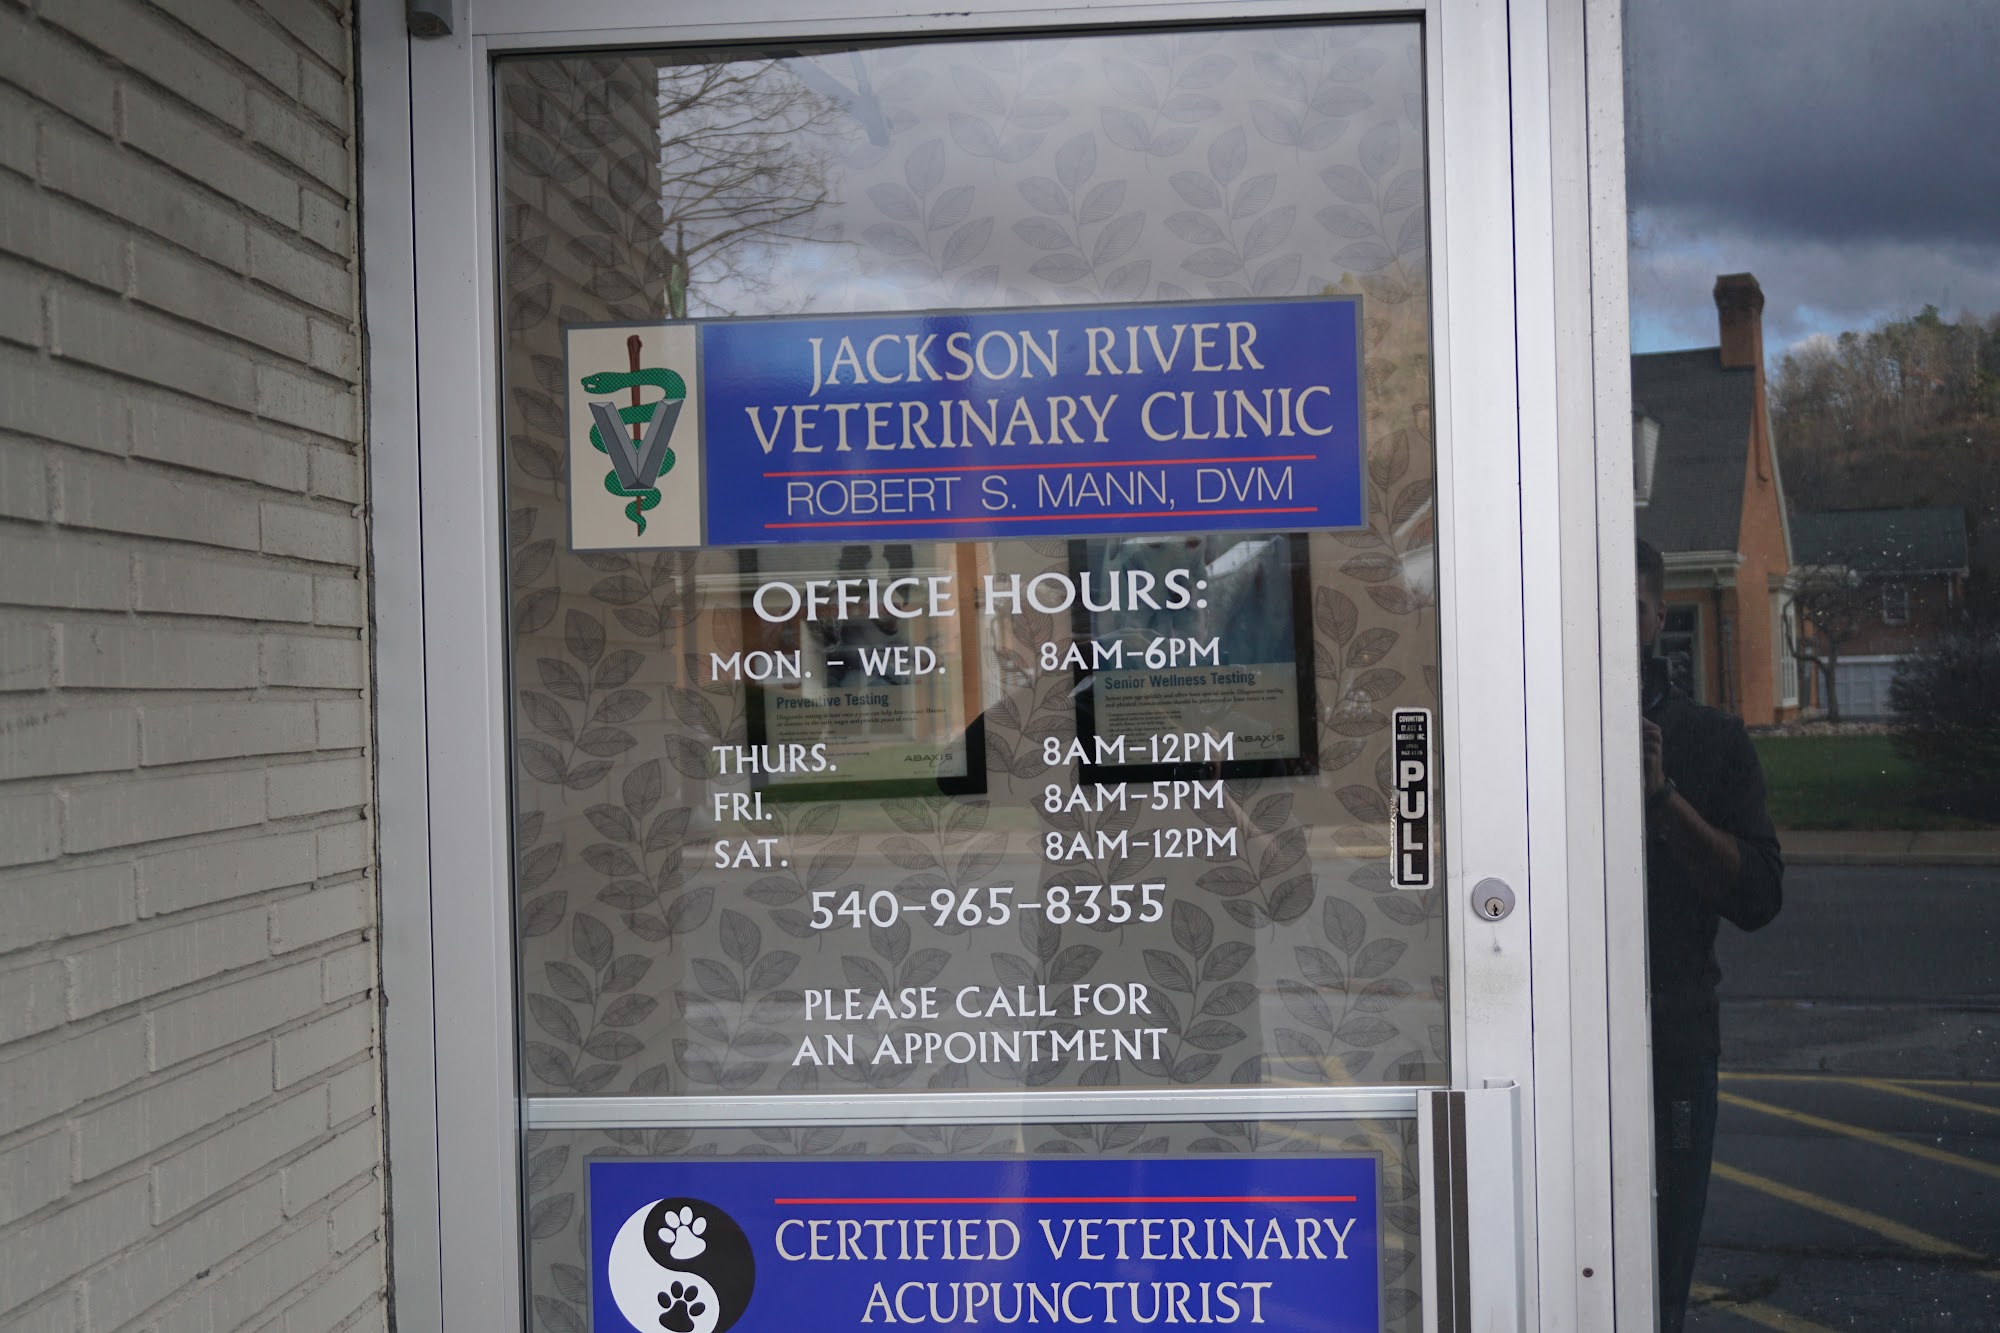 Jackson River Veterinary Clinic 431 W Main St, Covington Virginia 24426